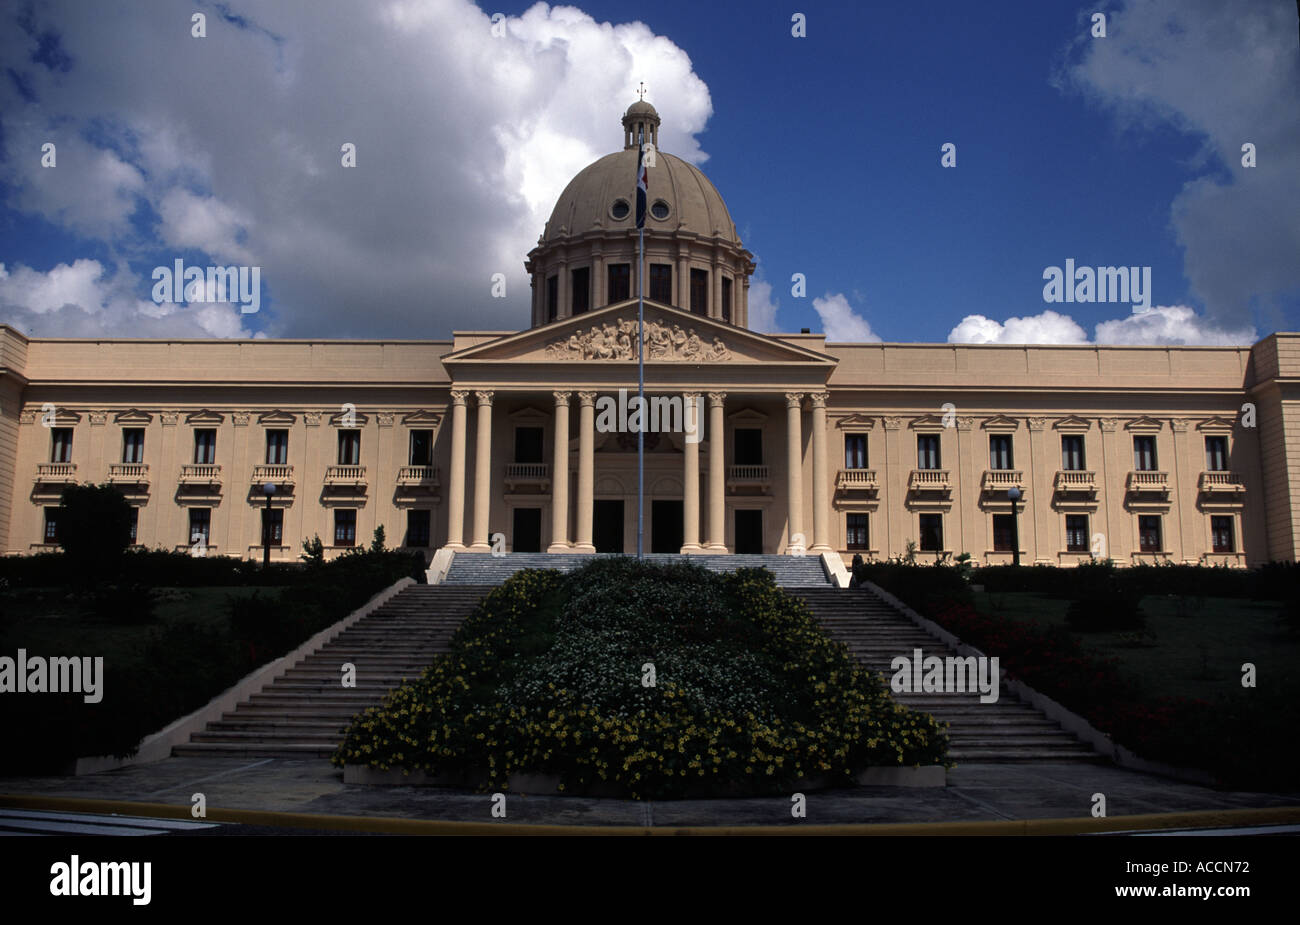 Palacio Nacional Or National Palace Seat Of The Government Of Dominican Republic Santo Domingo